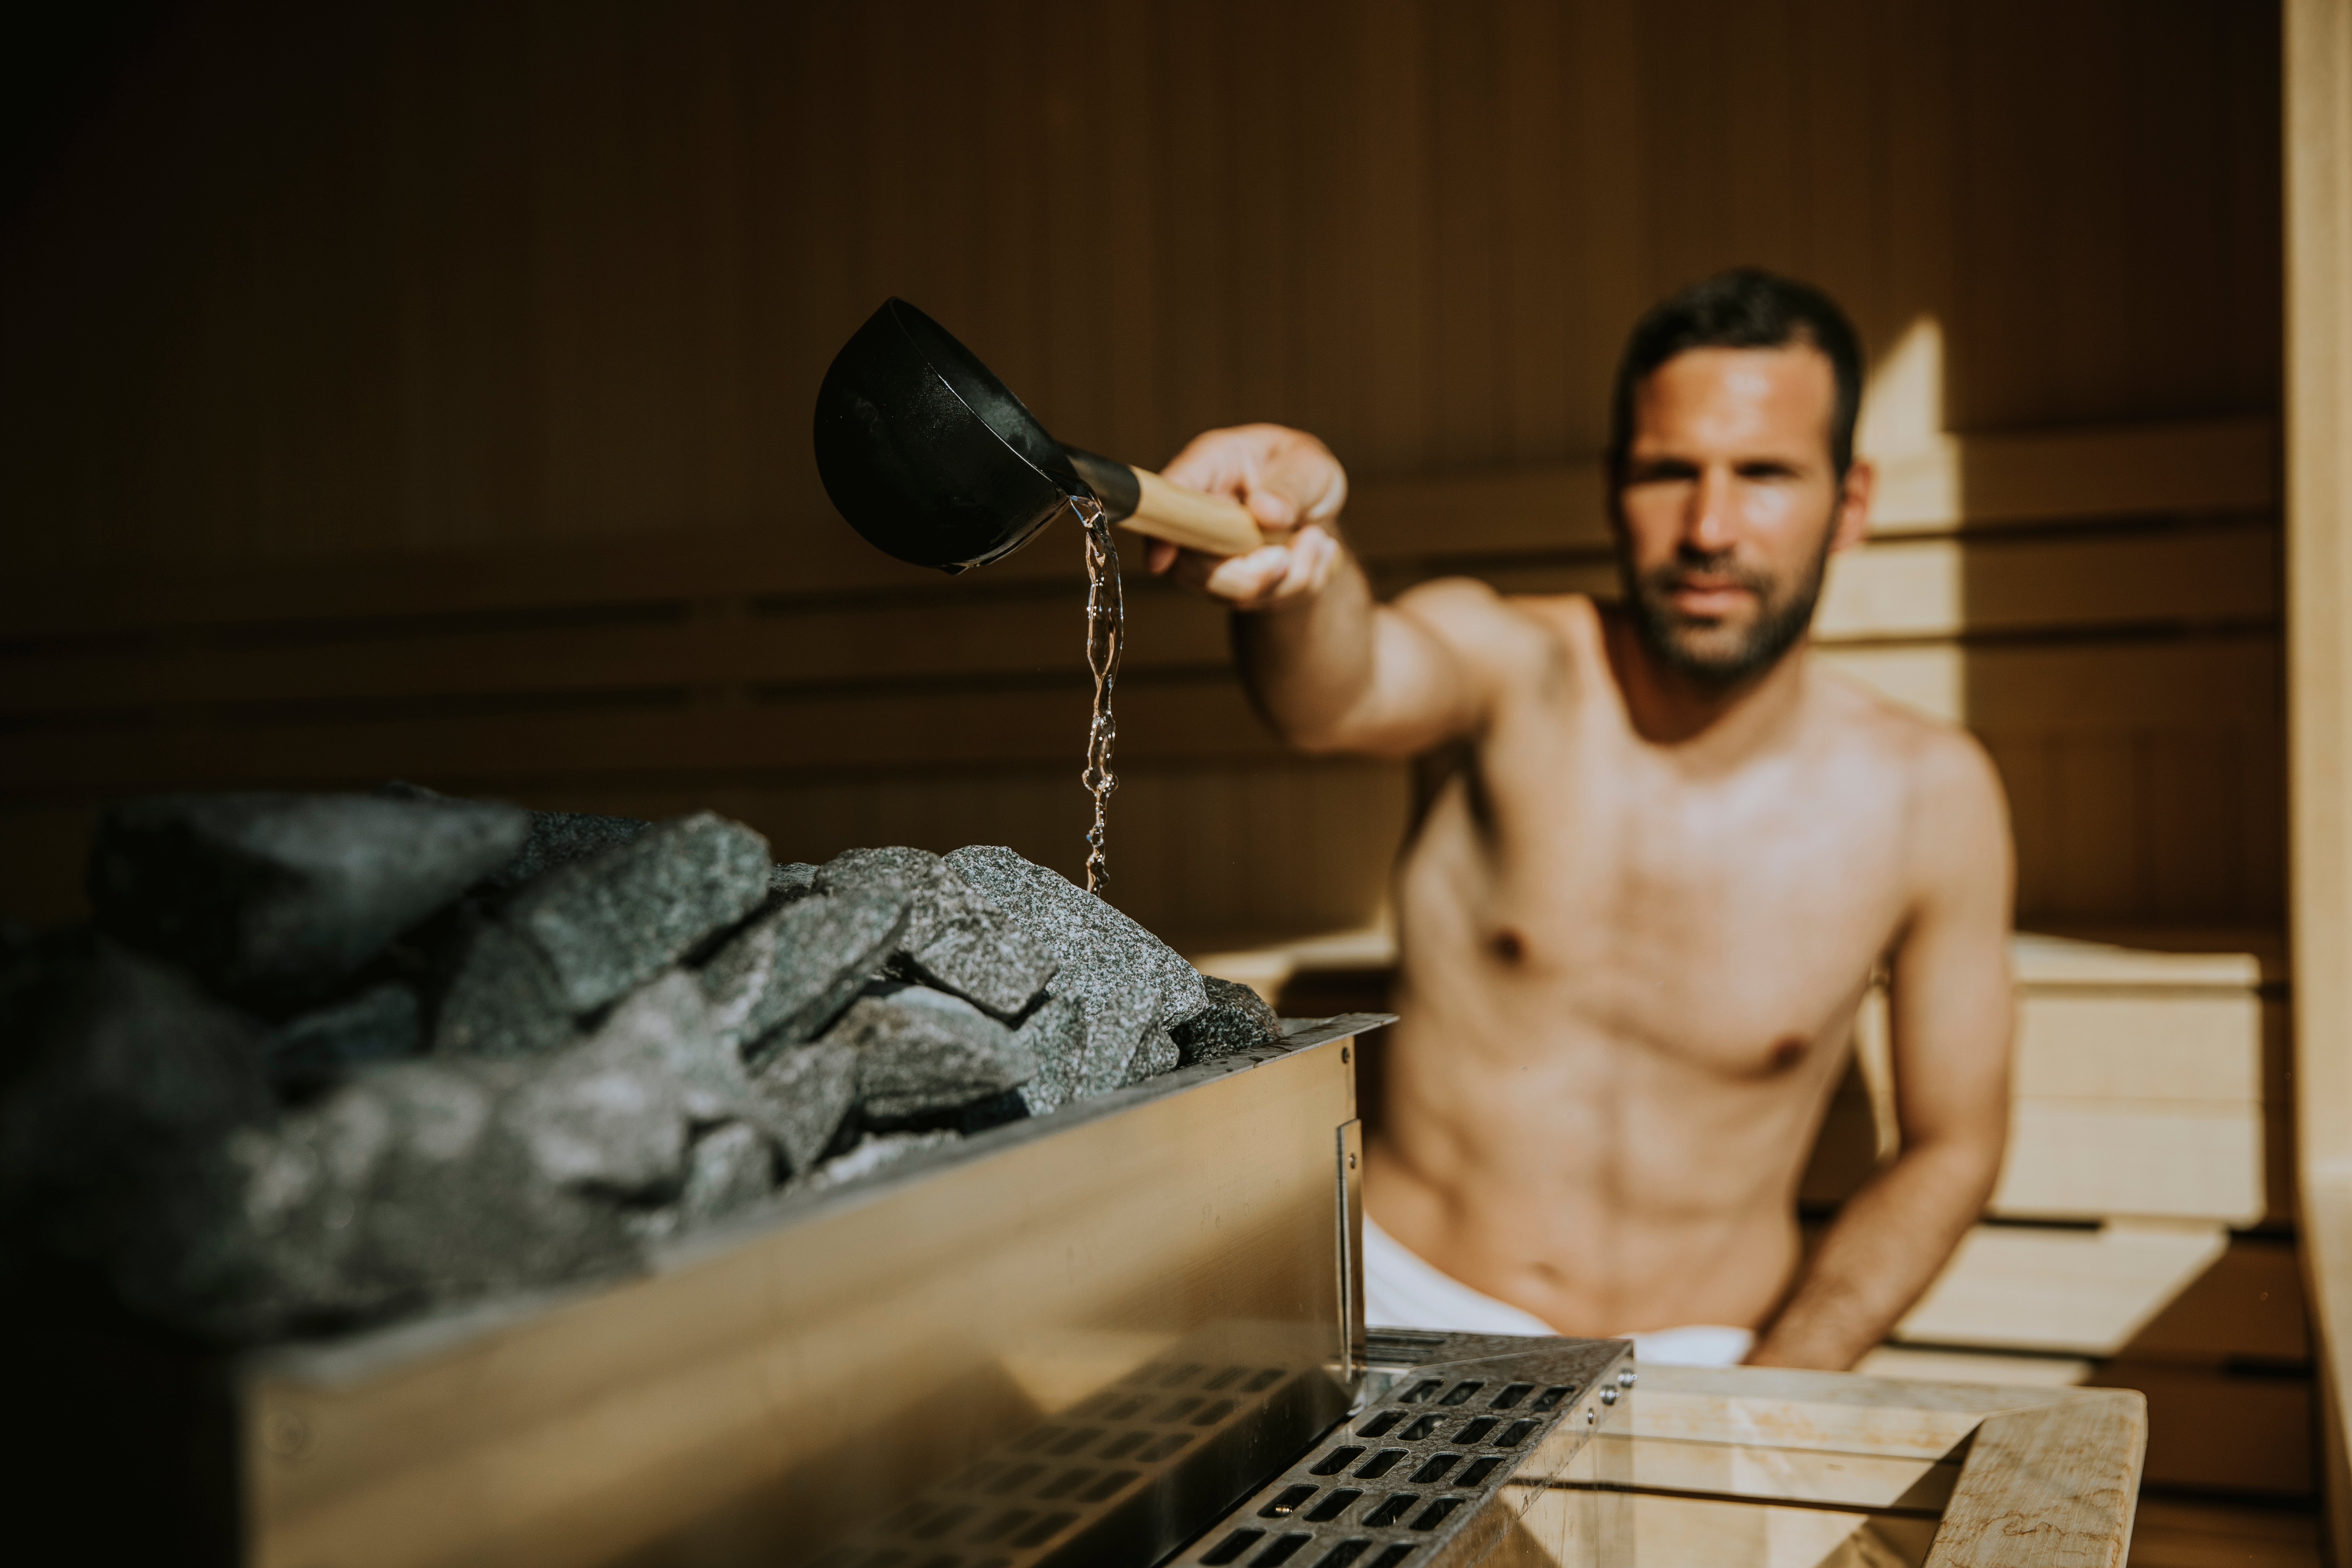 Aquamarine | How to take a sauna properly and healthily?